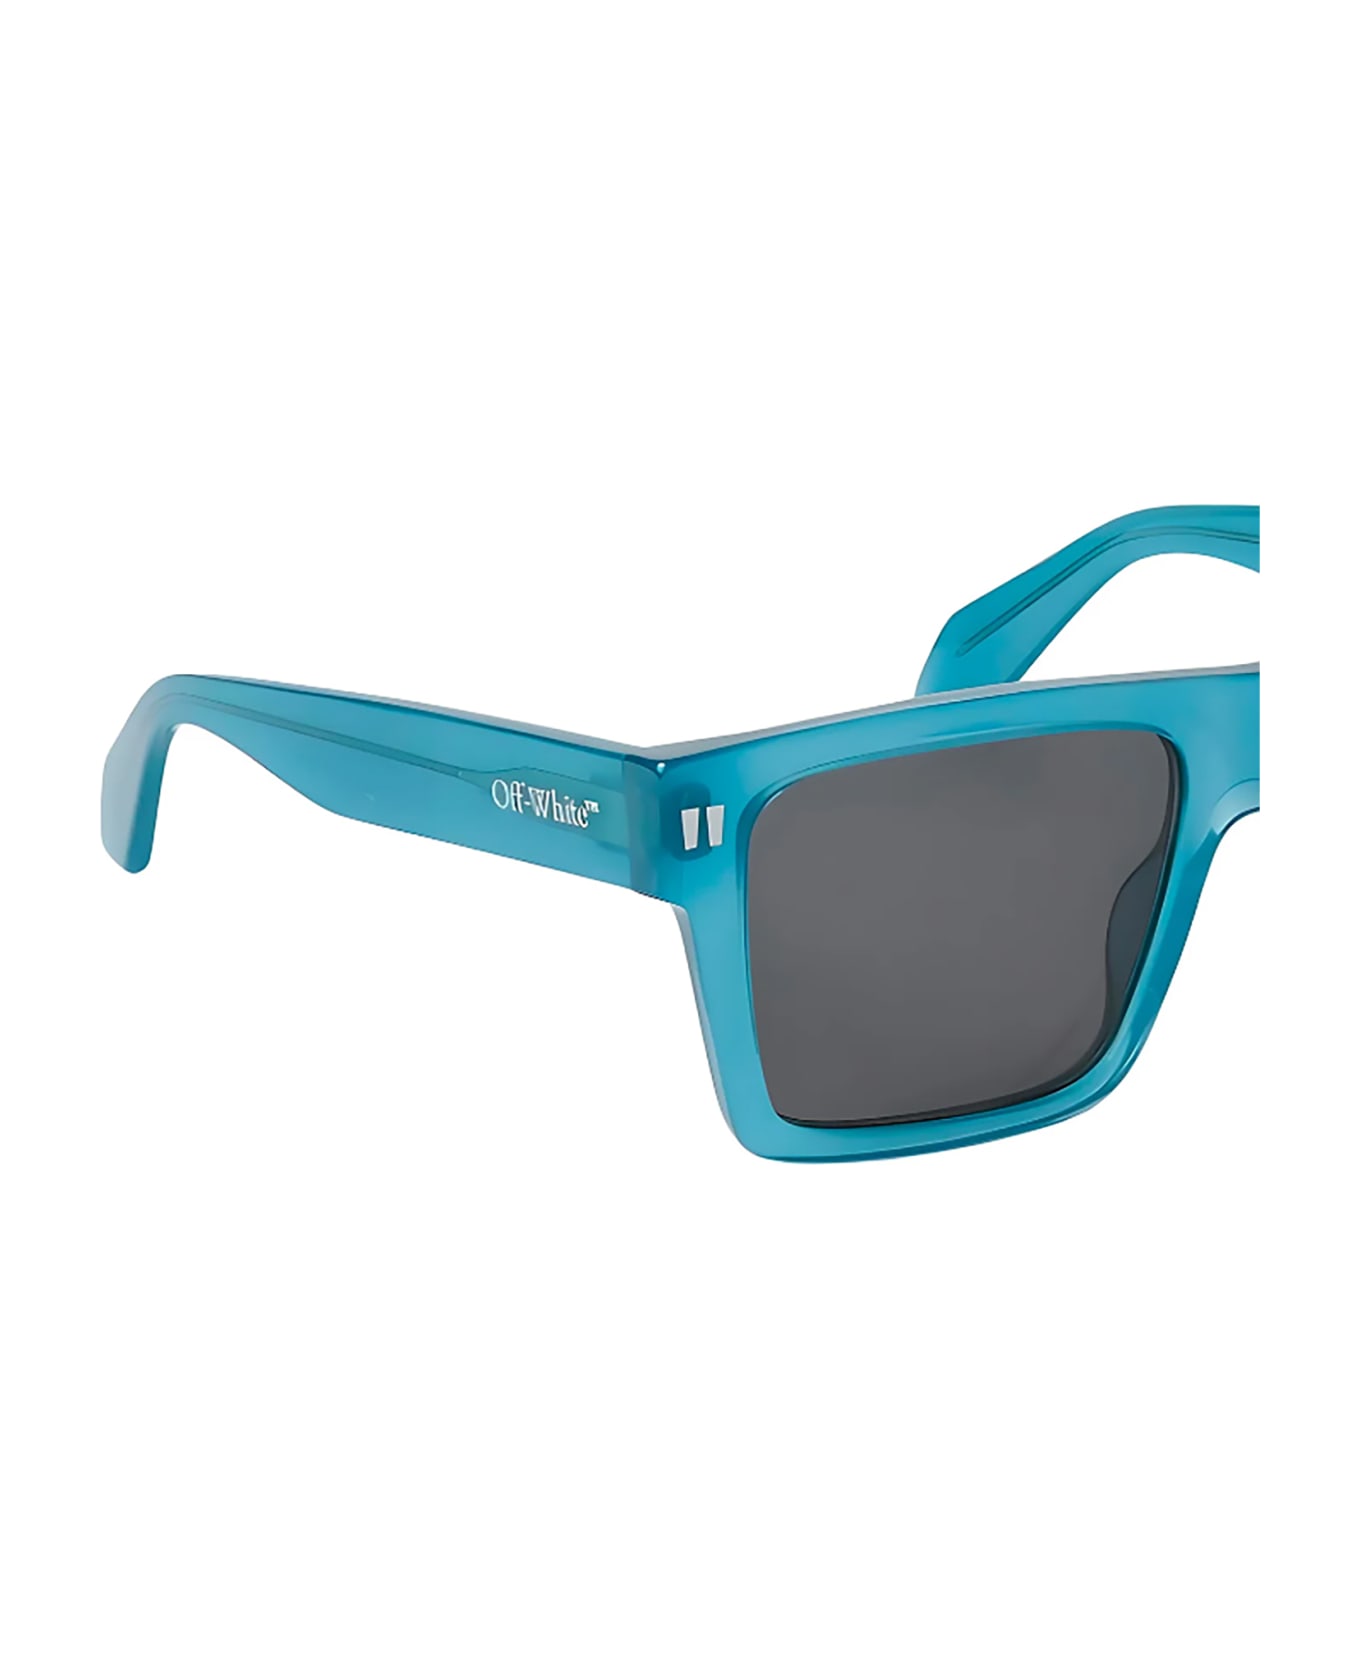 Off-White OERI109 LAWTON Sunglasses - Navy Blue サングラス